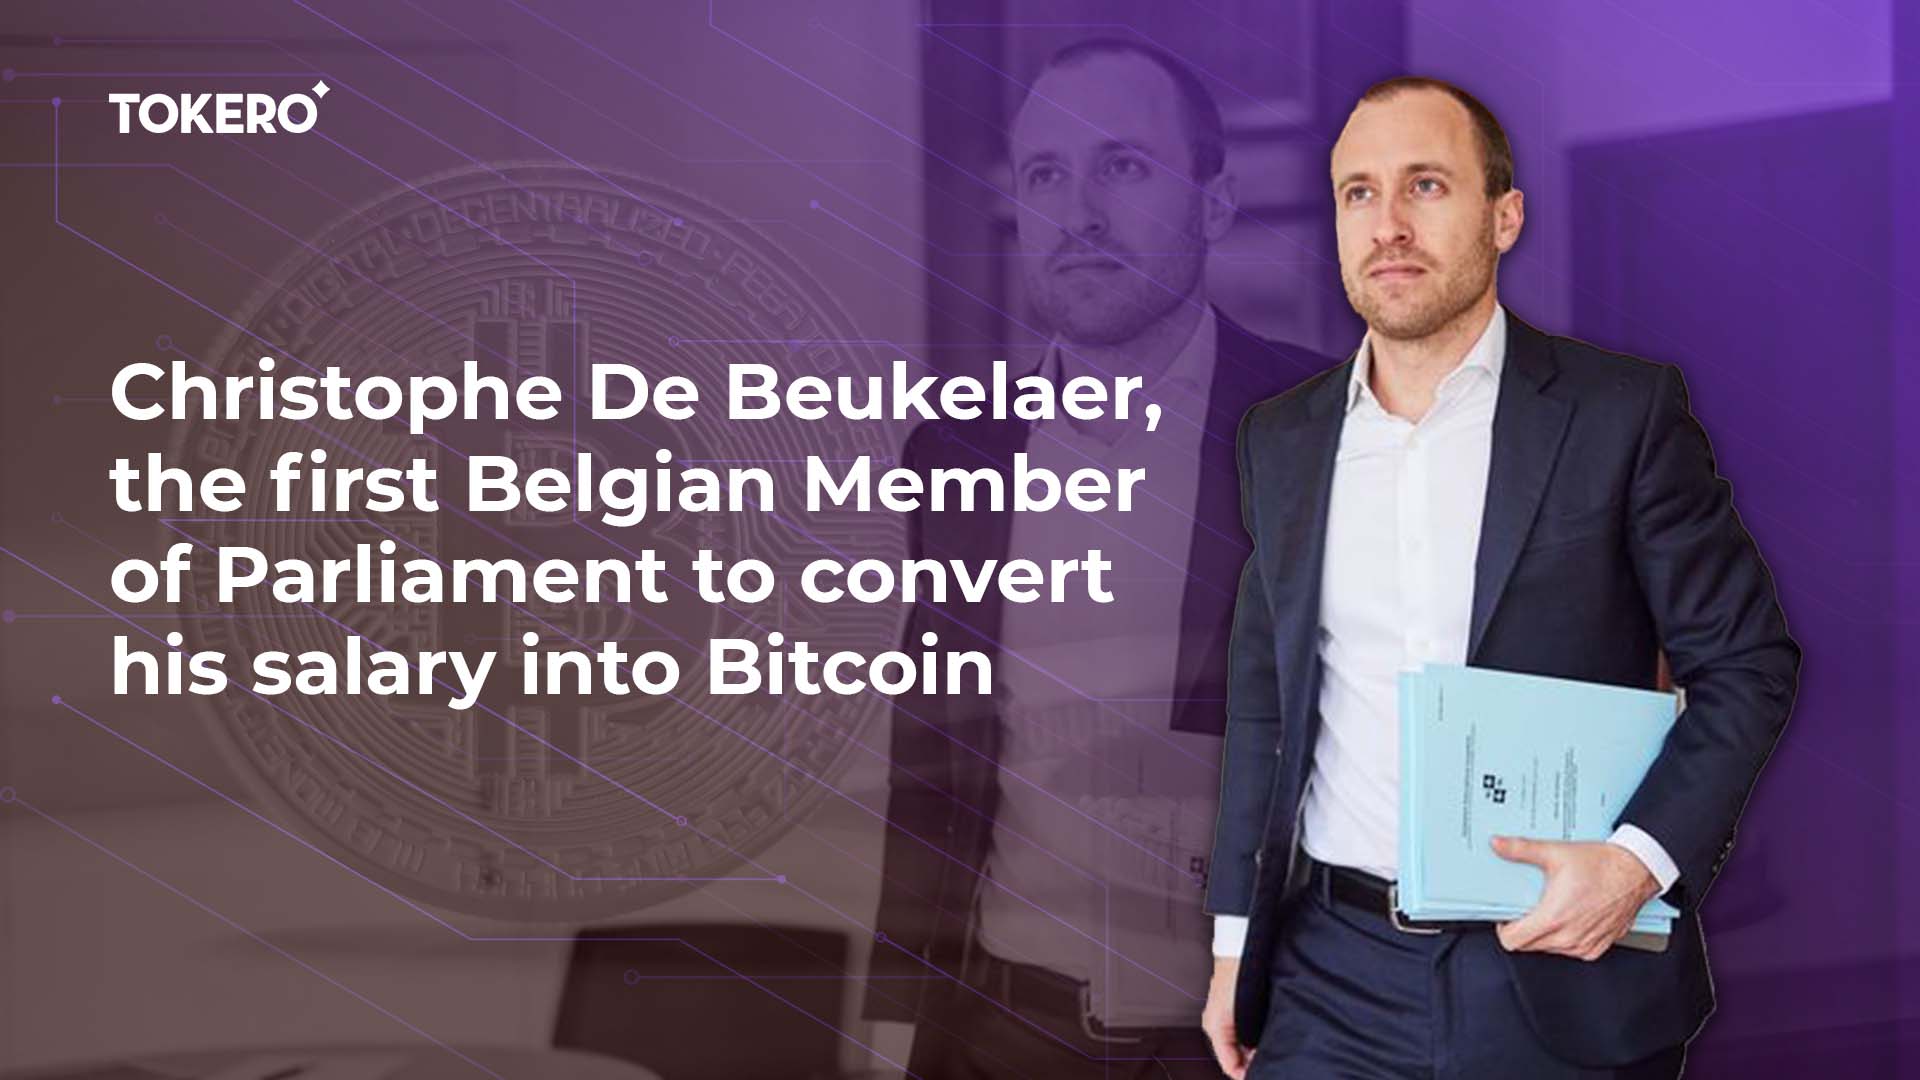 Christophe De Beukelaer, the first Belgian Member of Parliament to convert his salary into Bitcoin